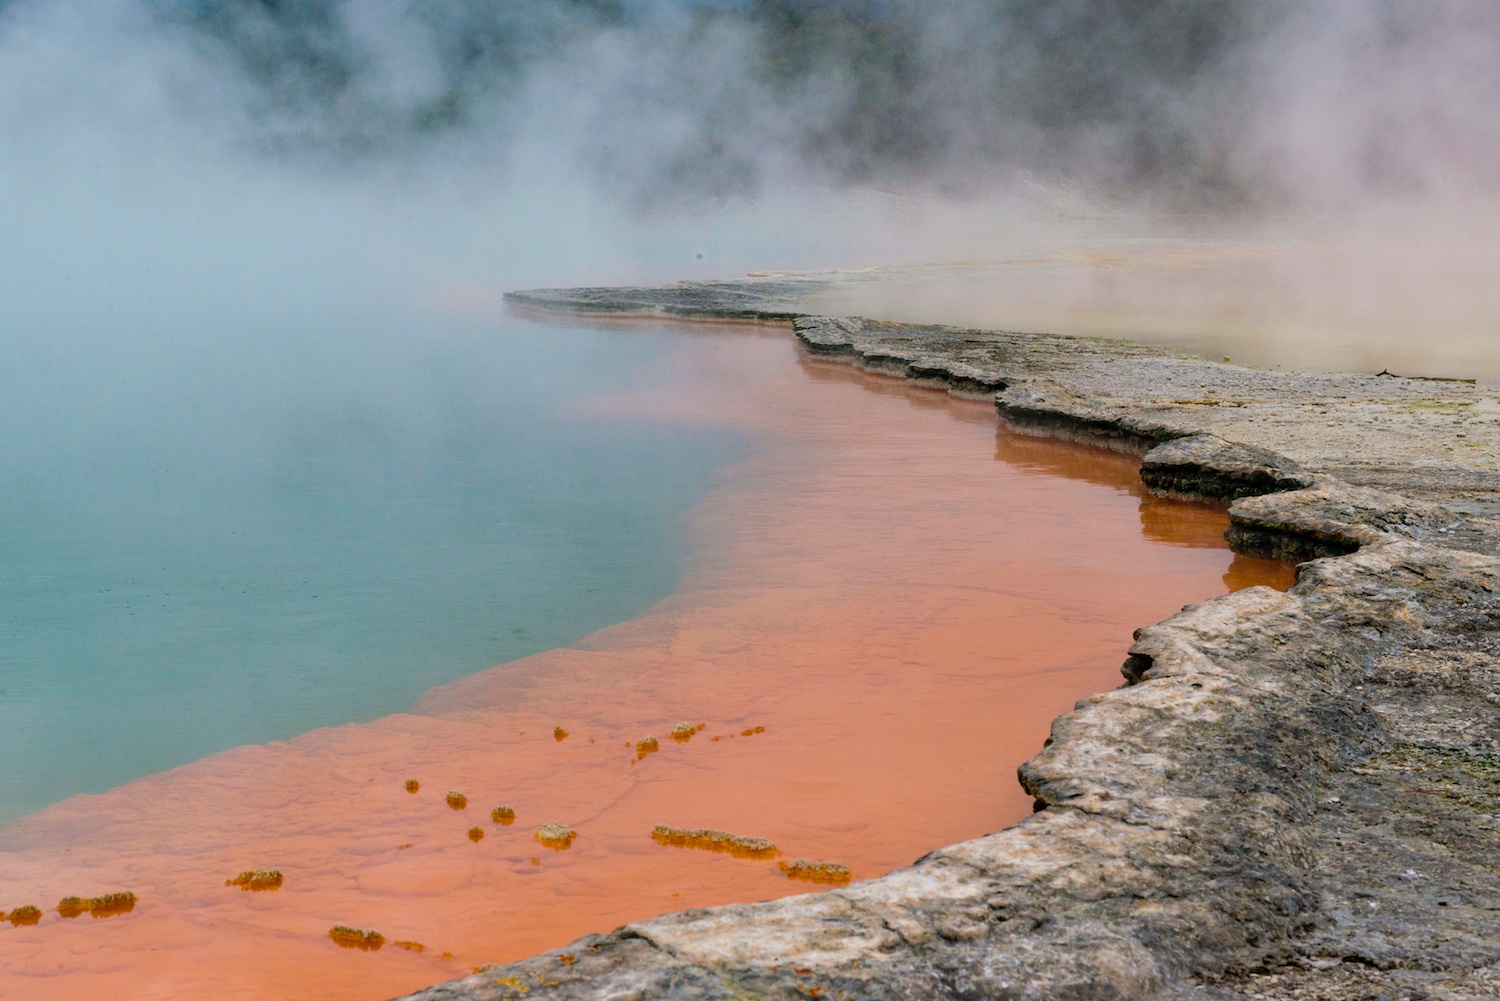 Thermal, sulphuric hot springs in Rotorua, New Zealand 